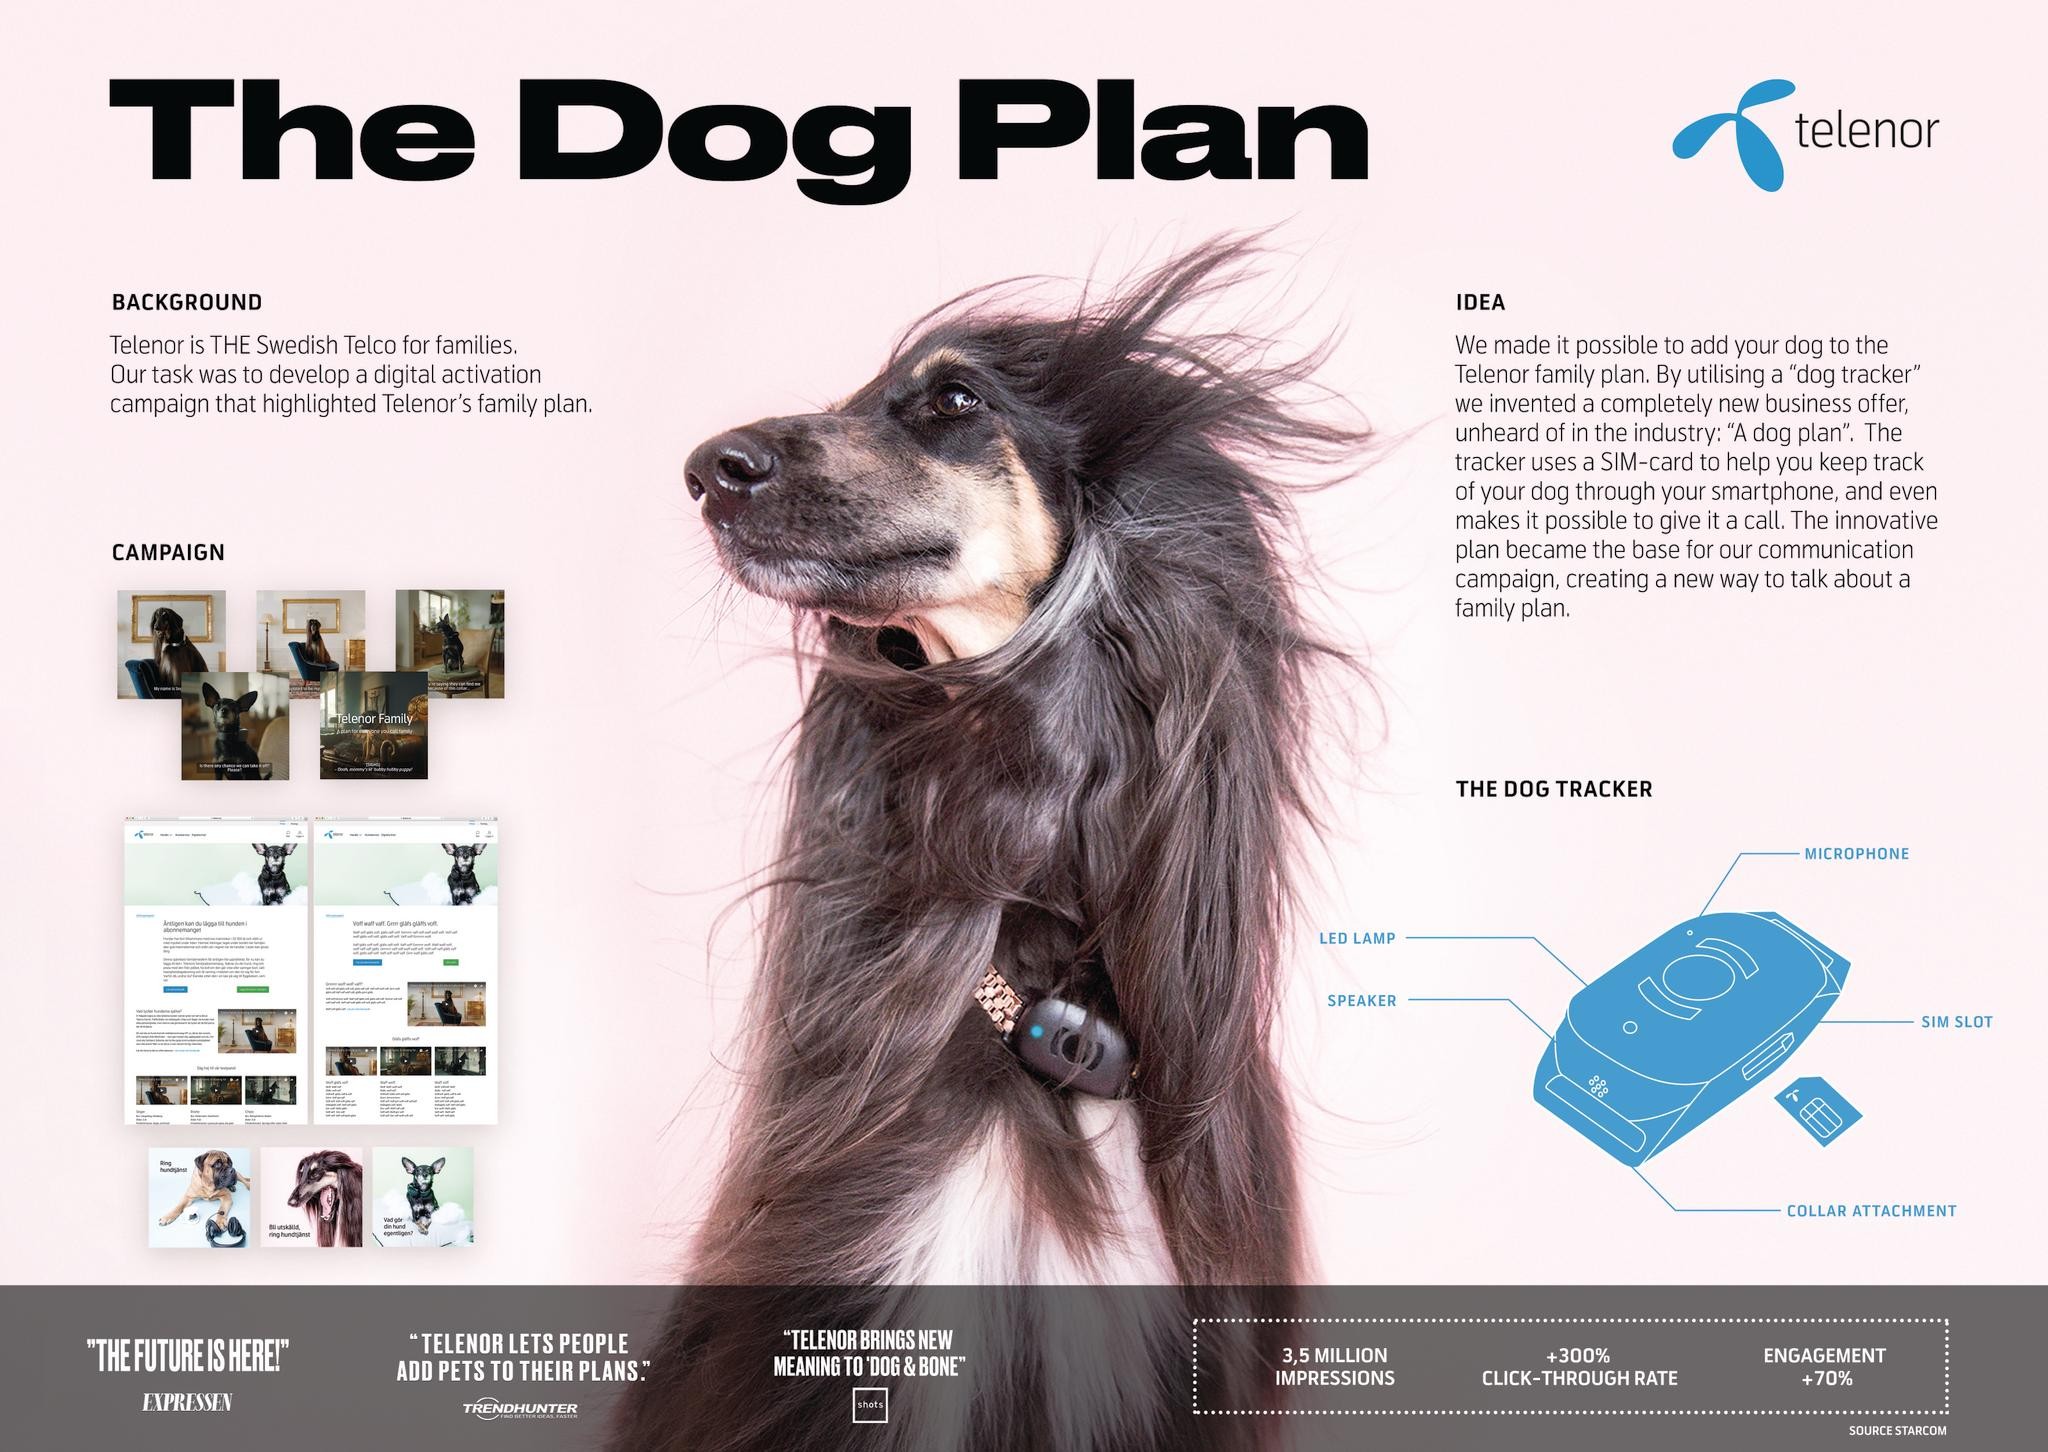 The Dog Plan